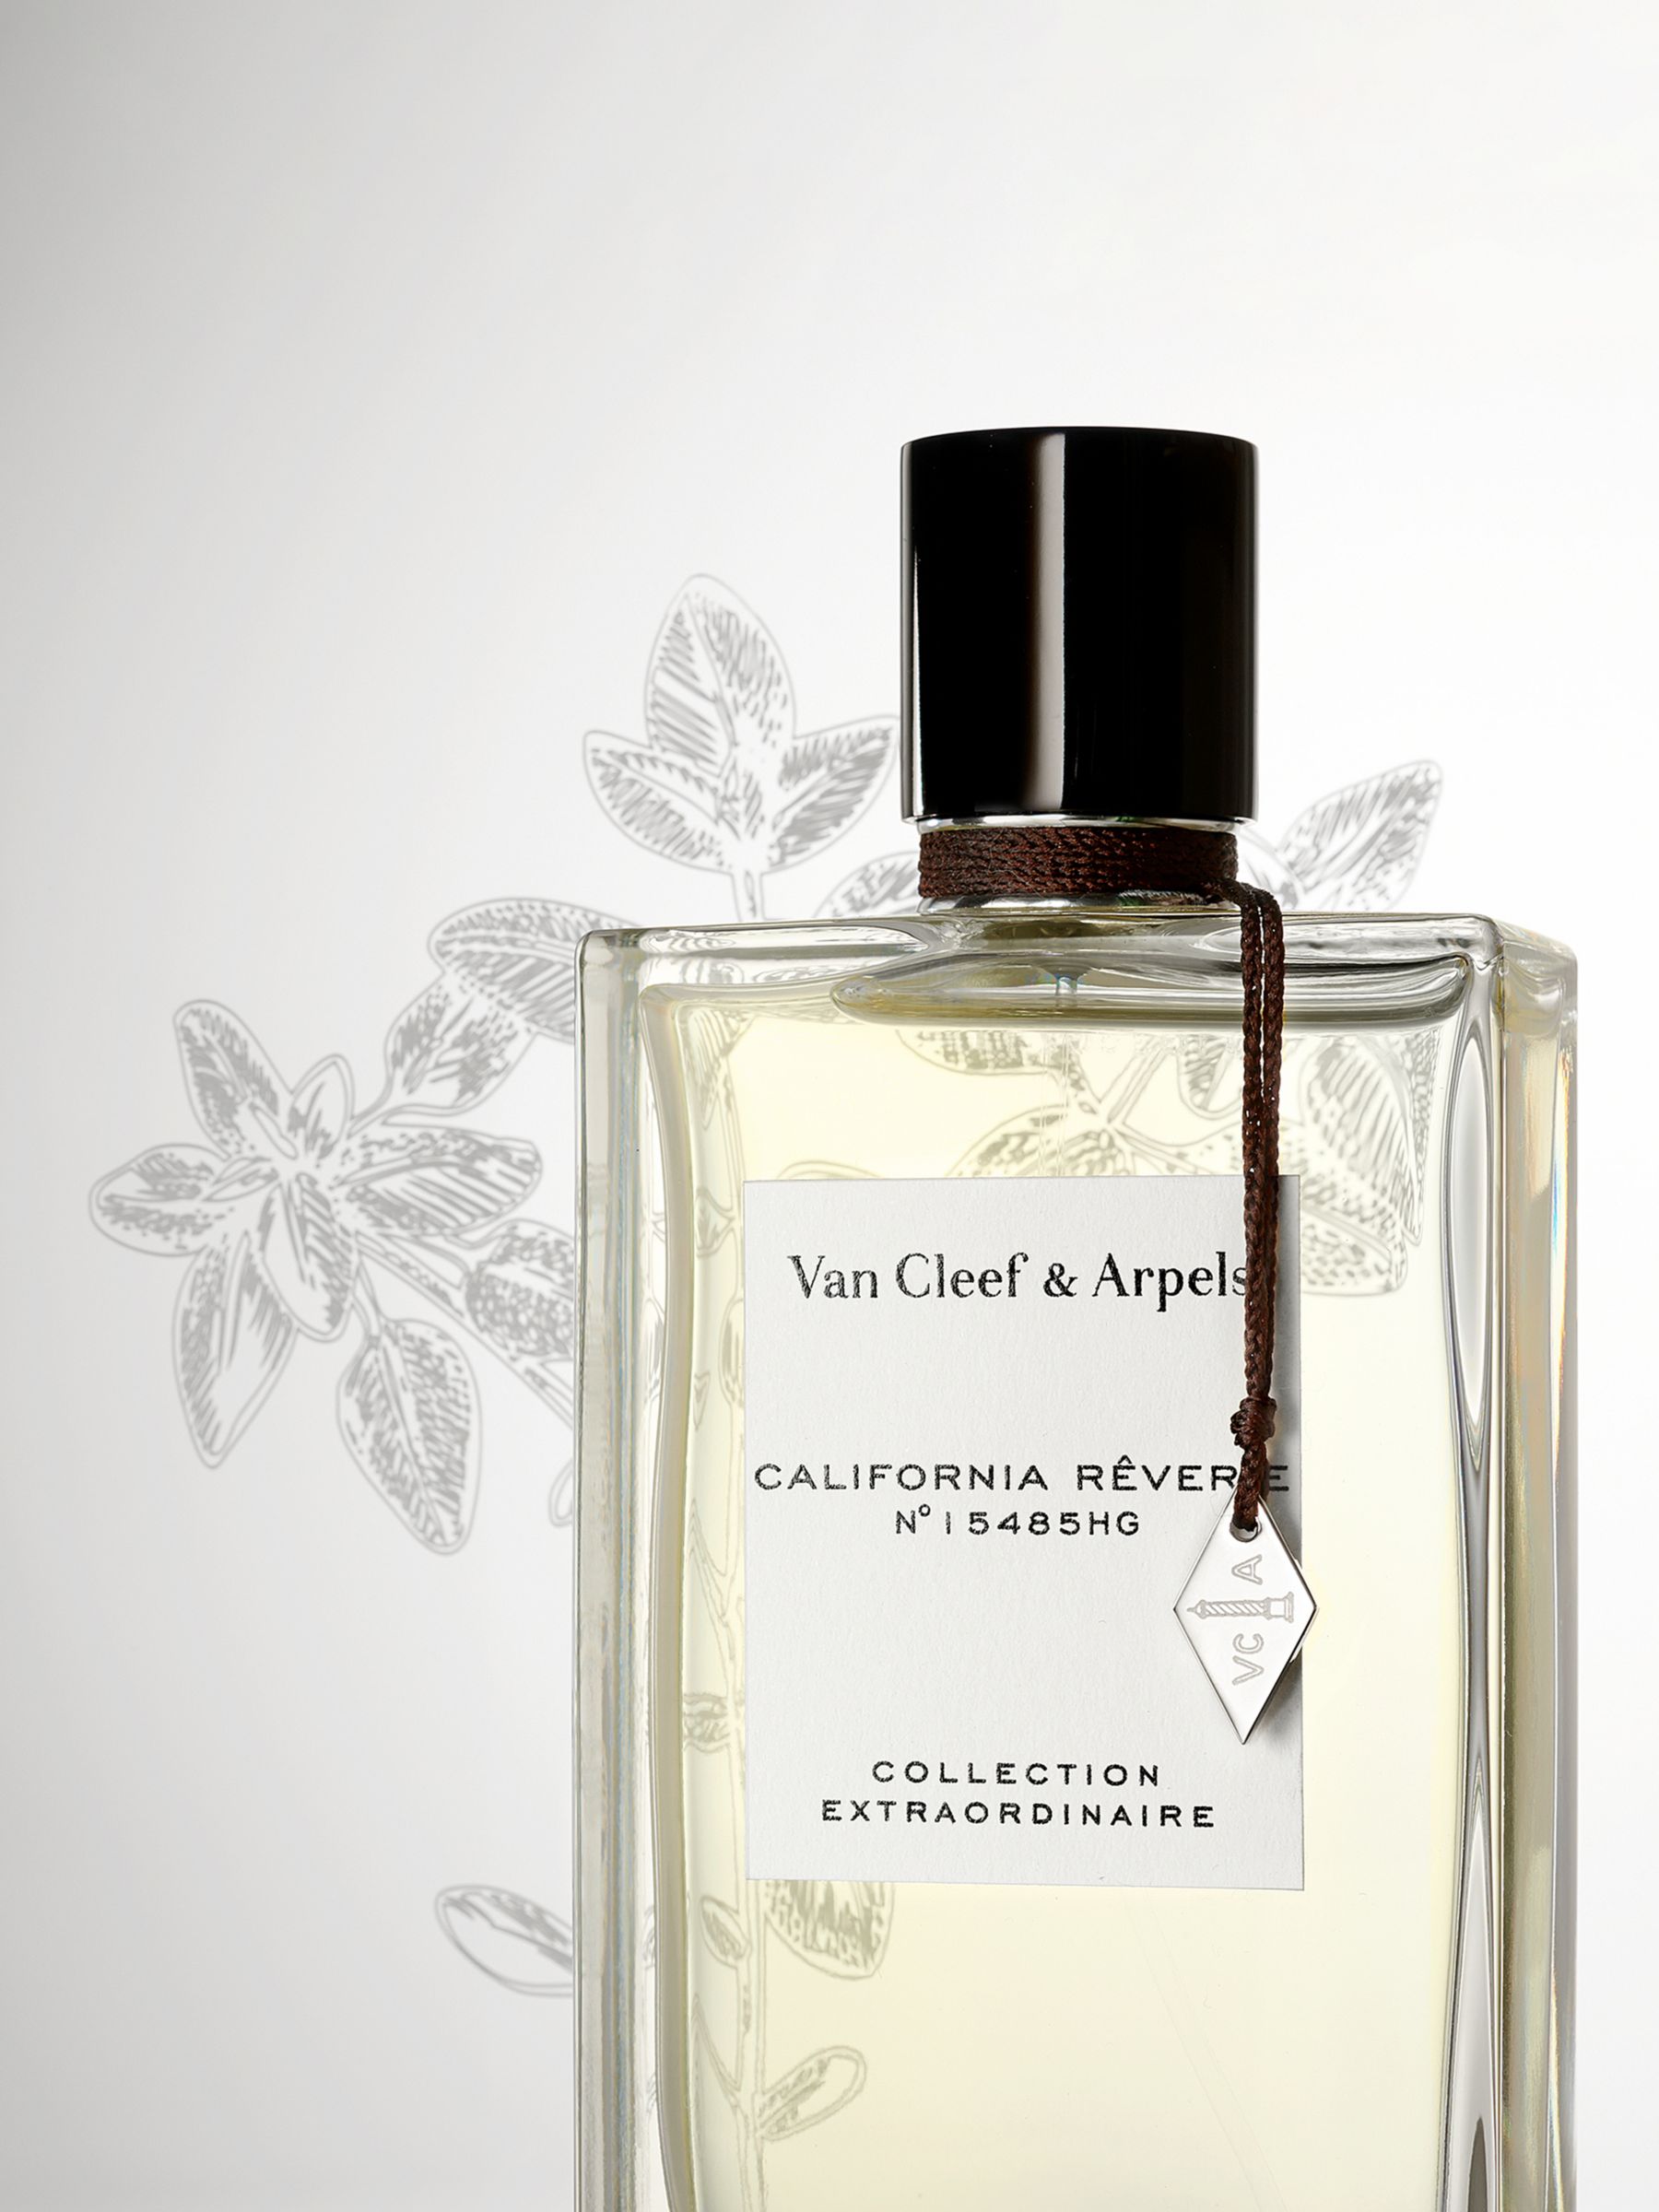 Van Cleef & Arpels Collection Extraordinaire California Rêverie Eau de Parfum, 75ml 3